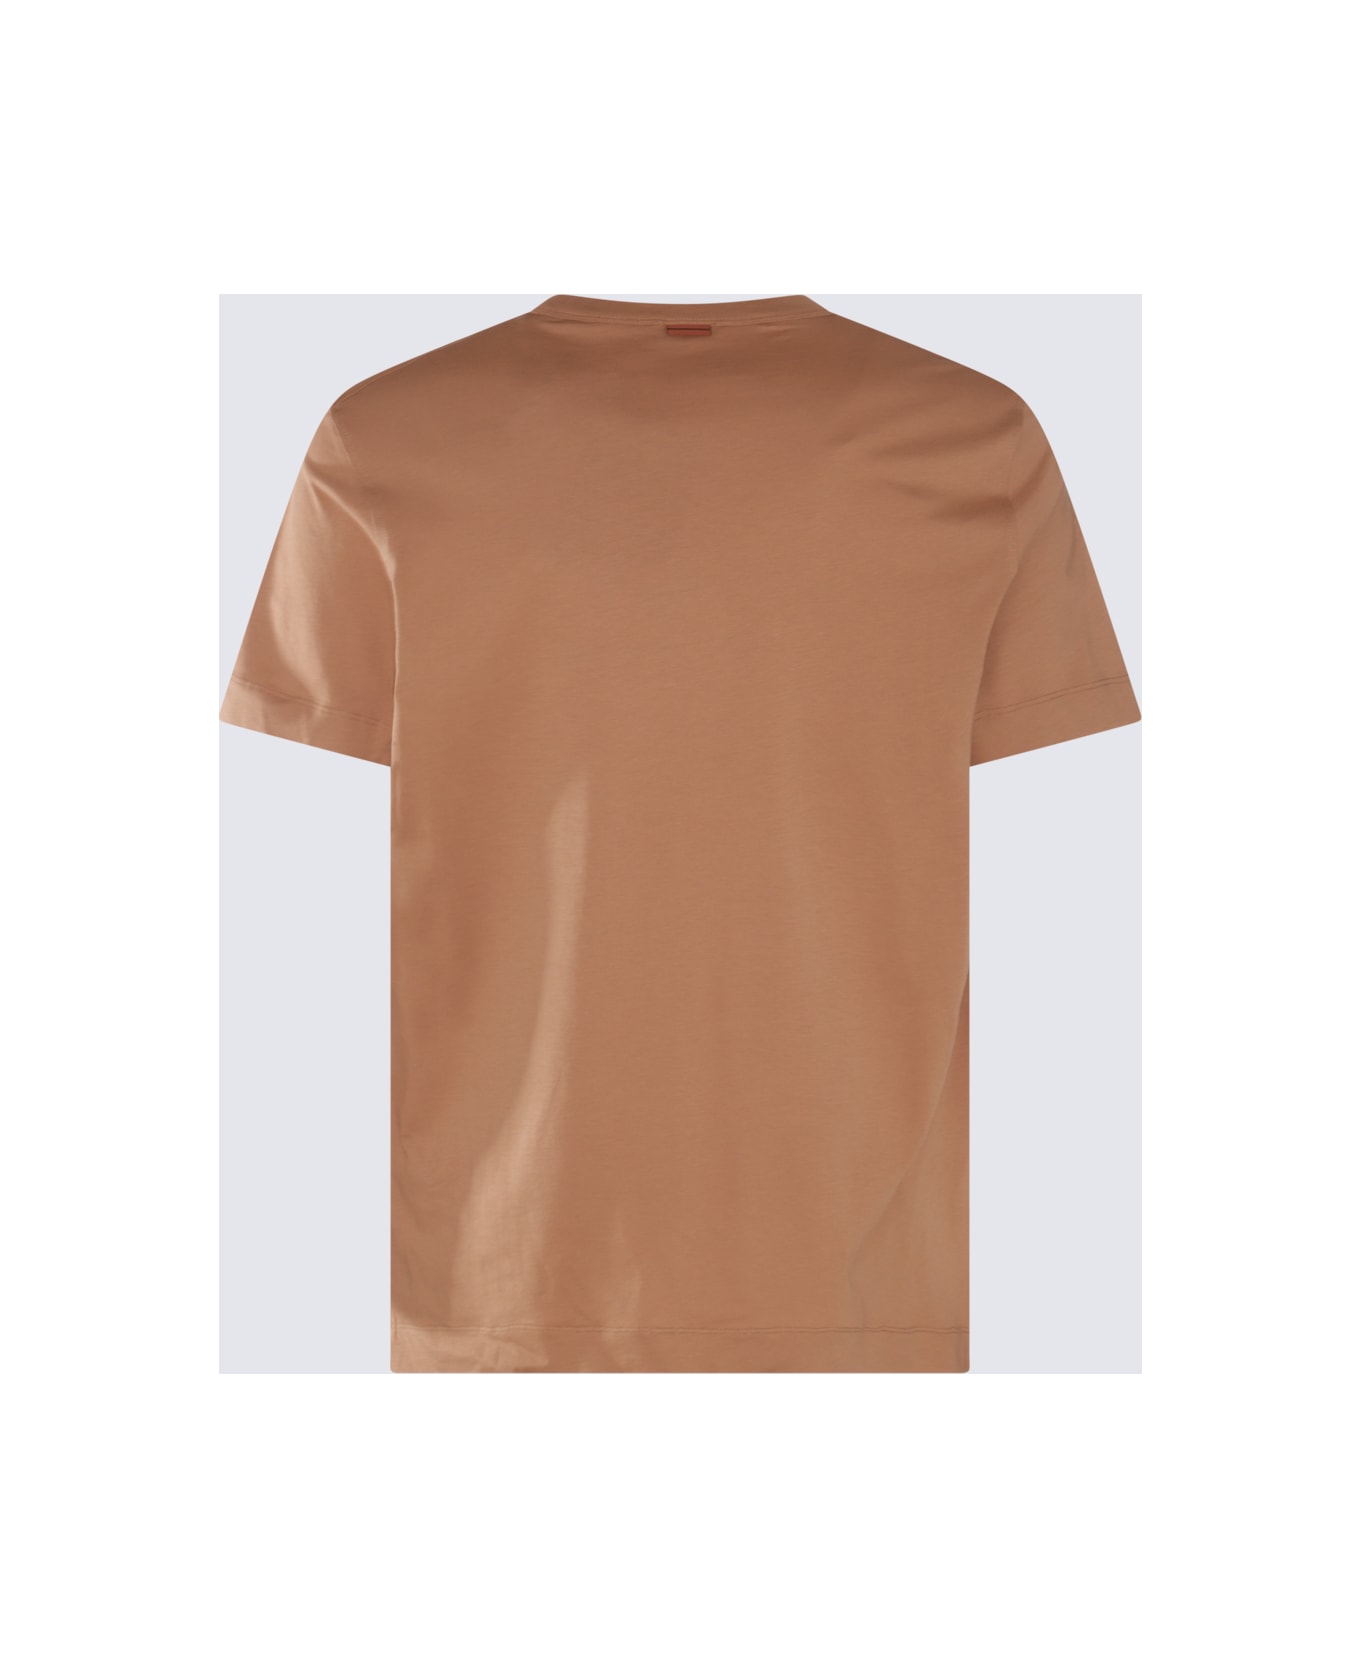 Zegna Camel Brown Cotton T-shirt - Brown